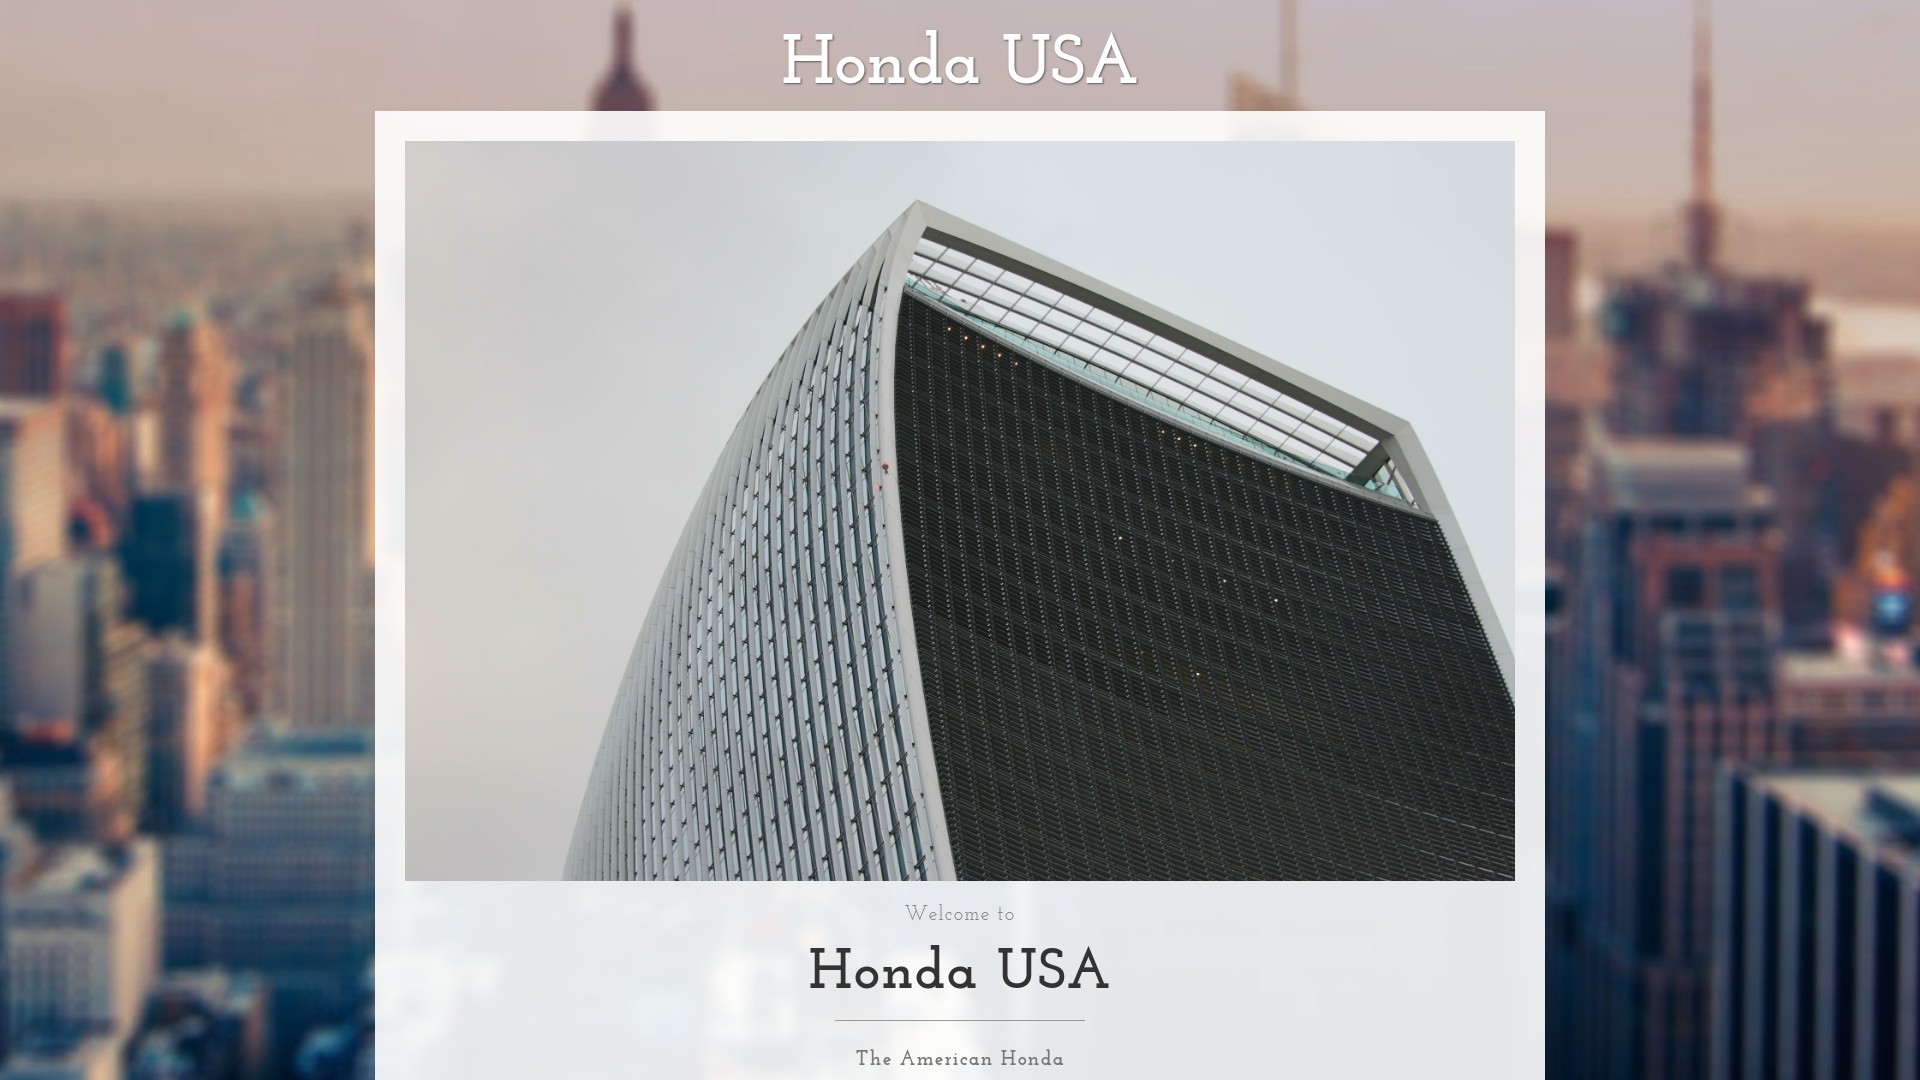 Hondagrants.org